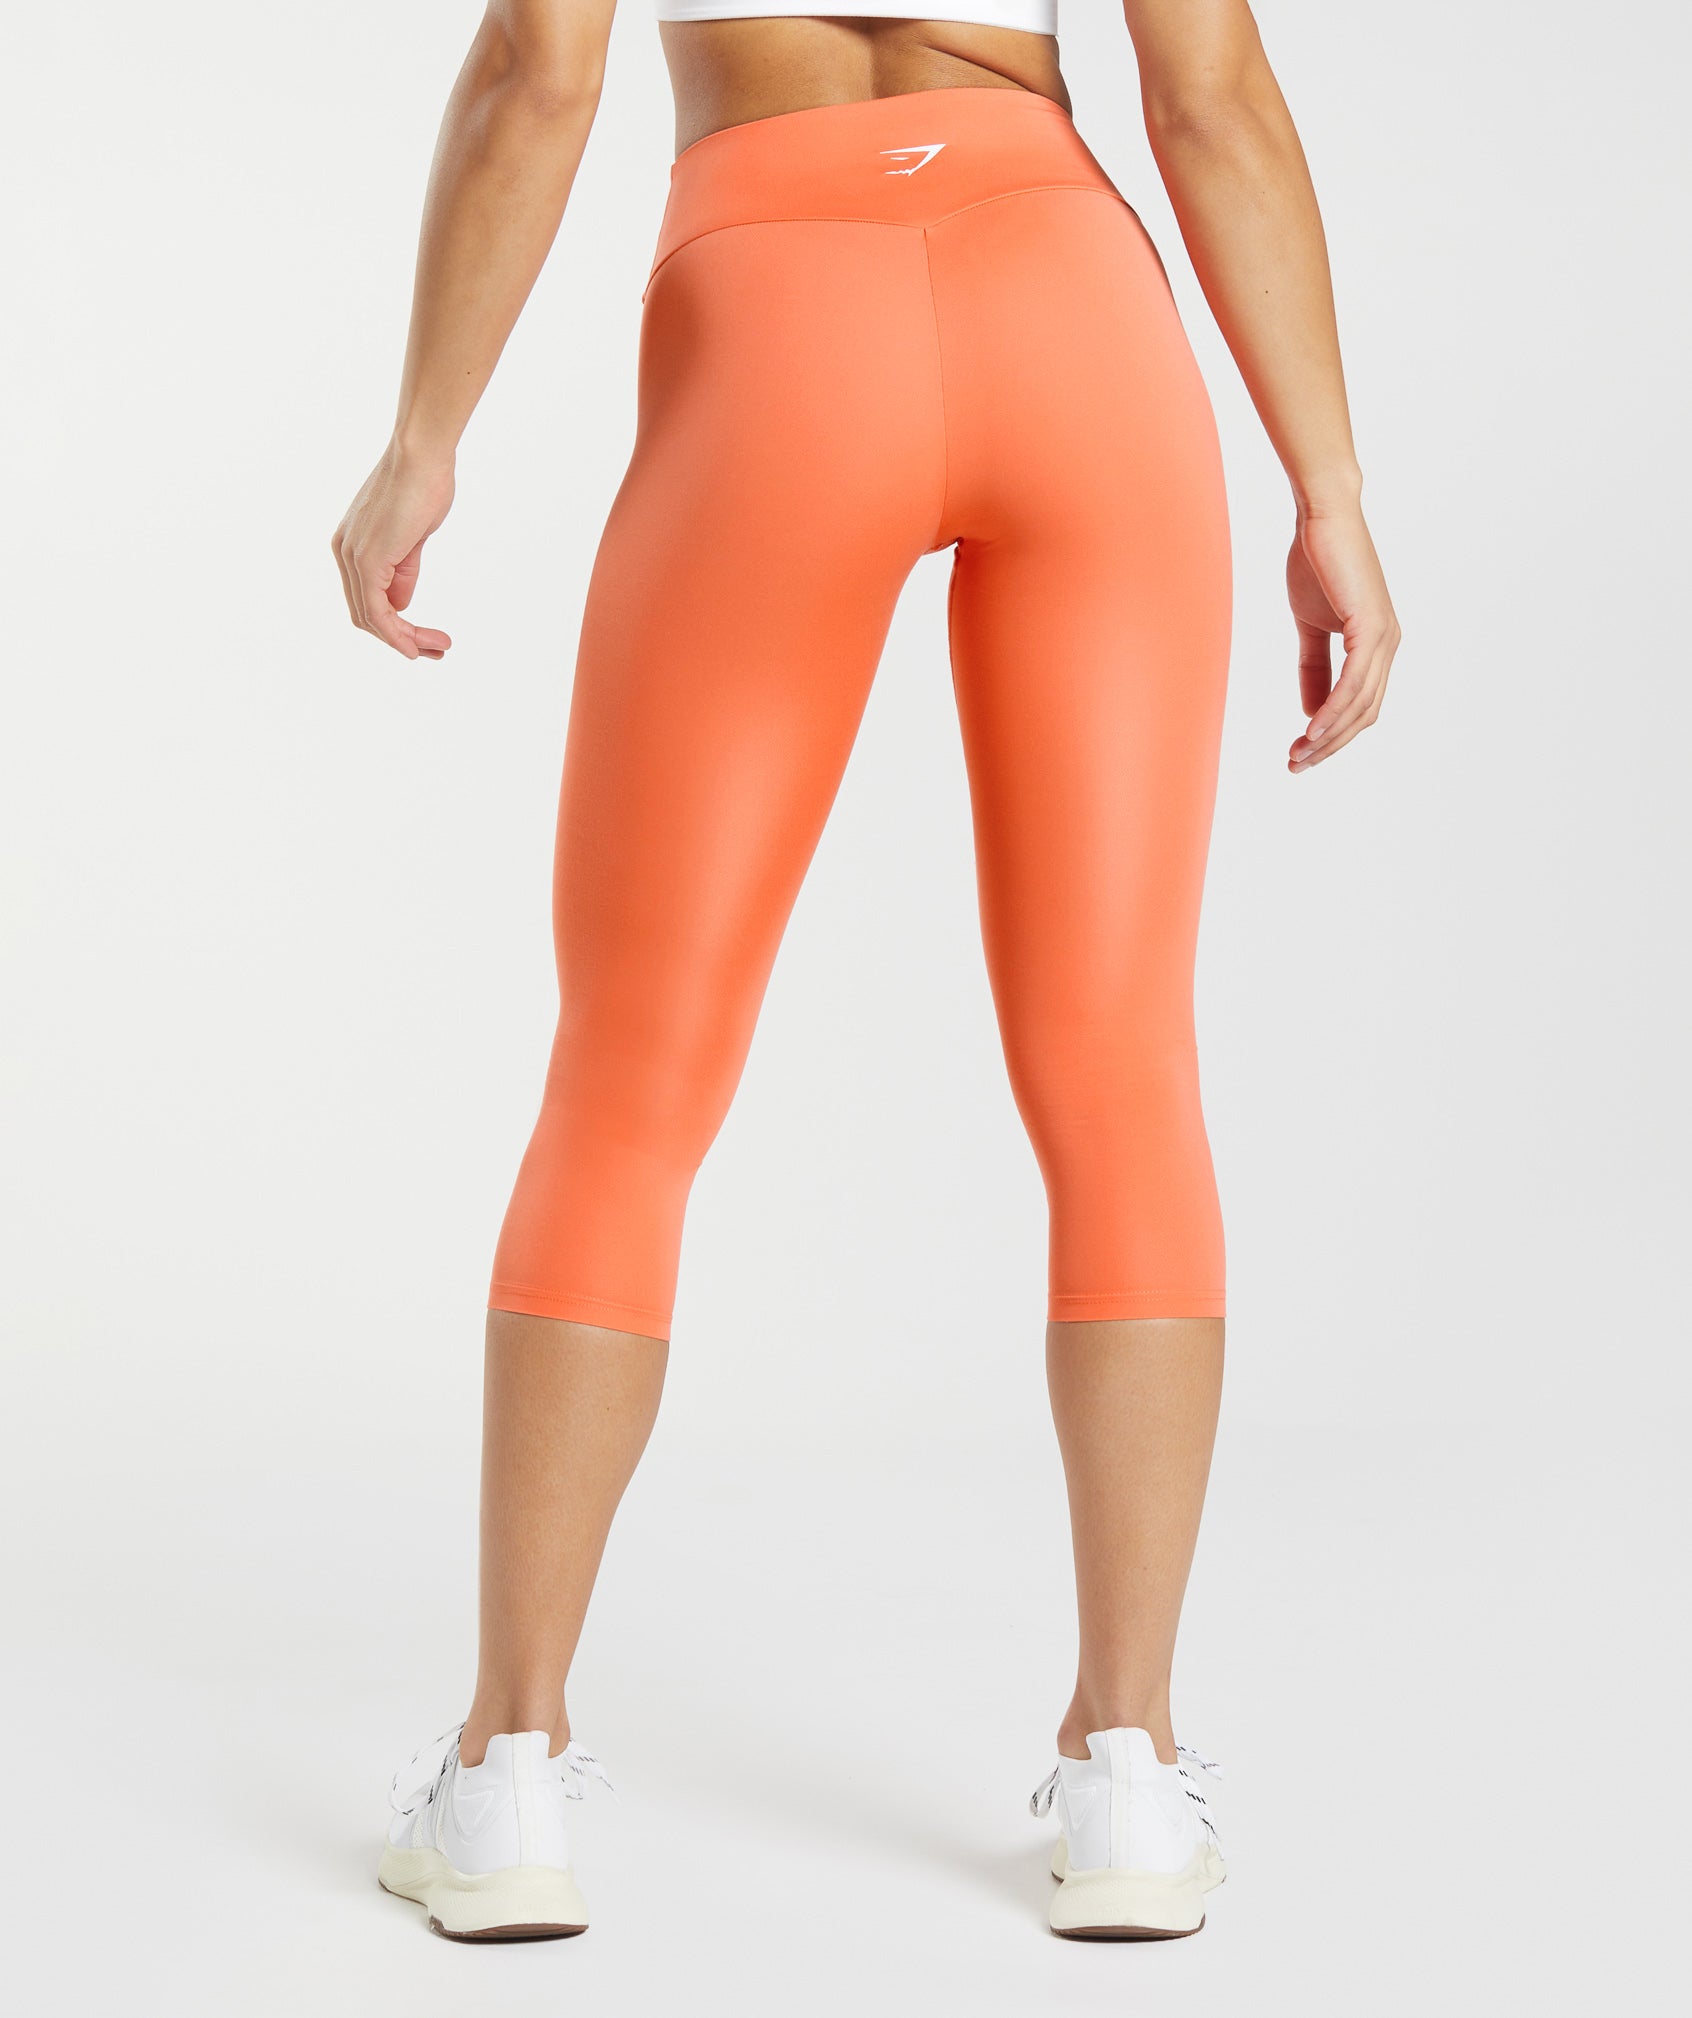 Gymshark, Pants & Jumpsuits, Creamsicle Orange Gymshark Leggings Size M